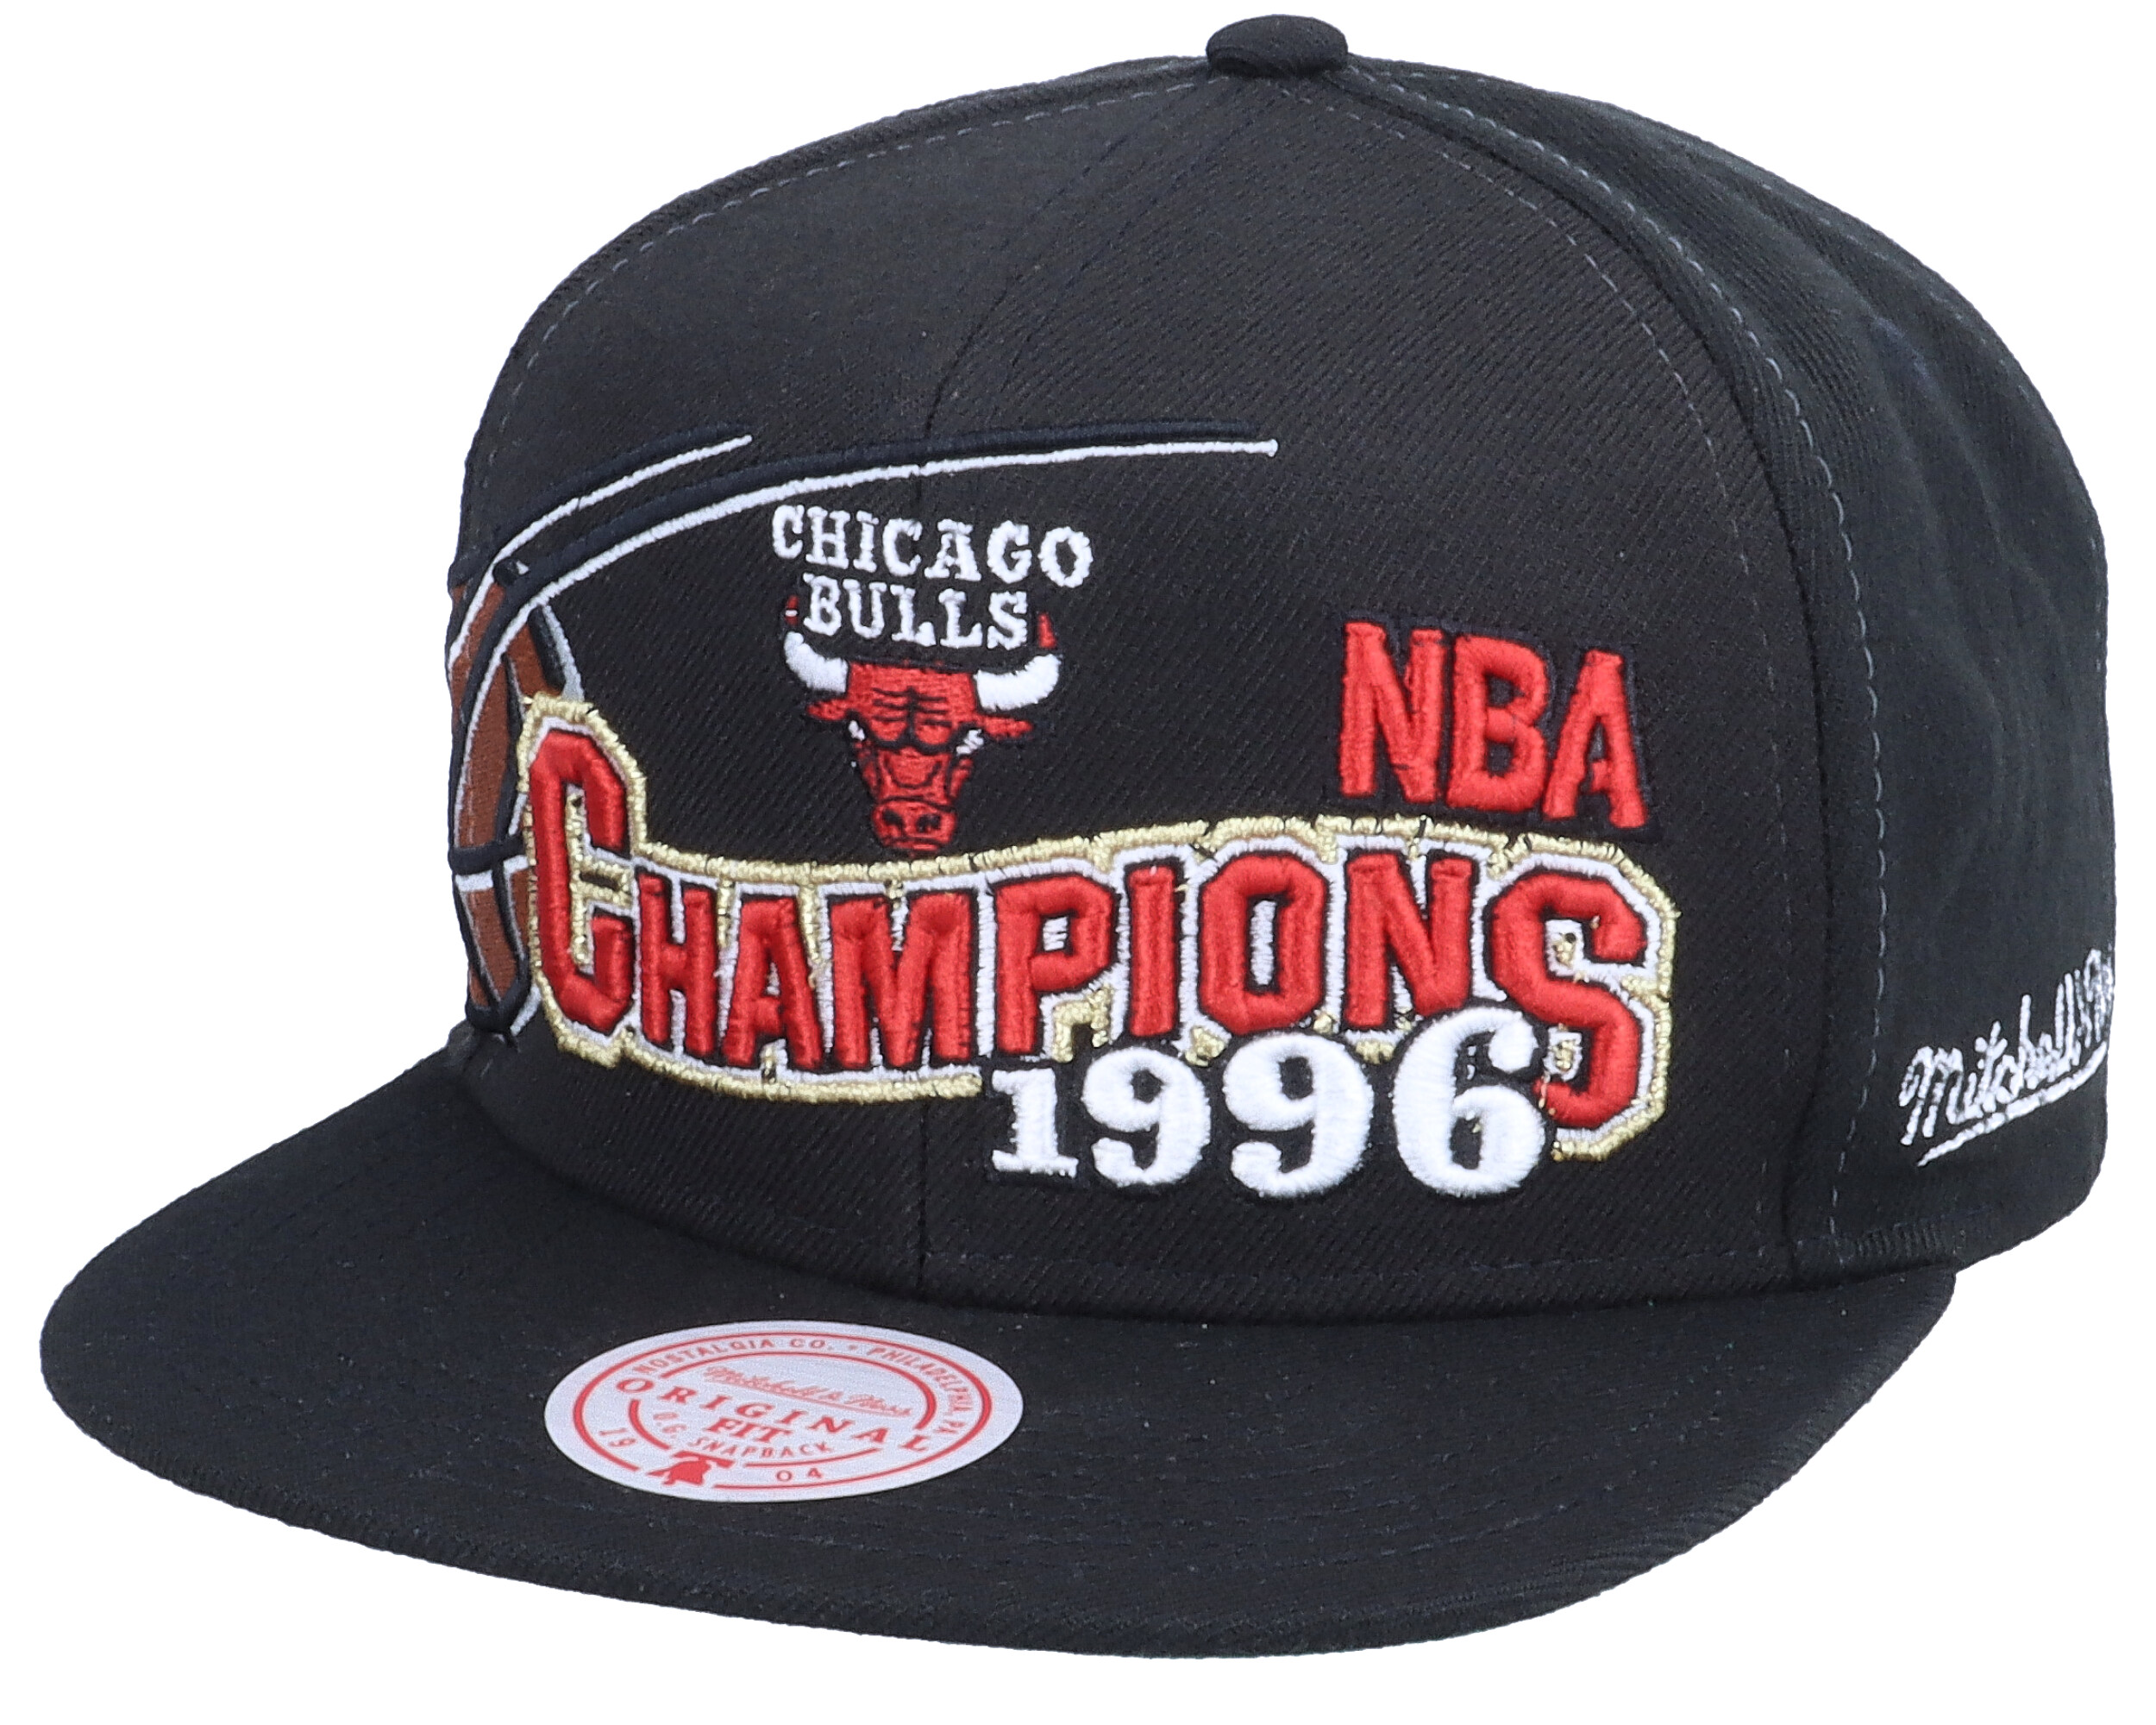 1996 championship cap